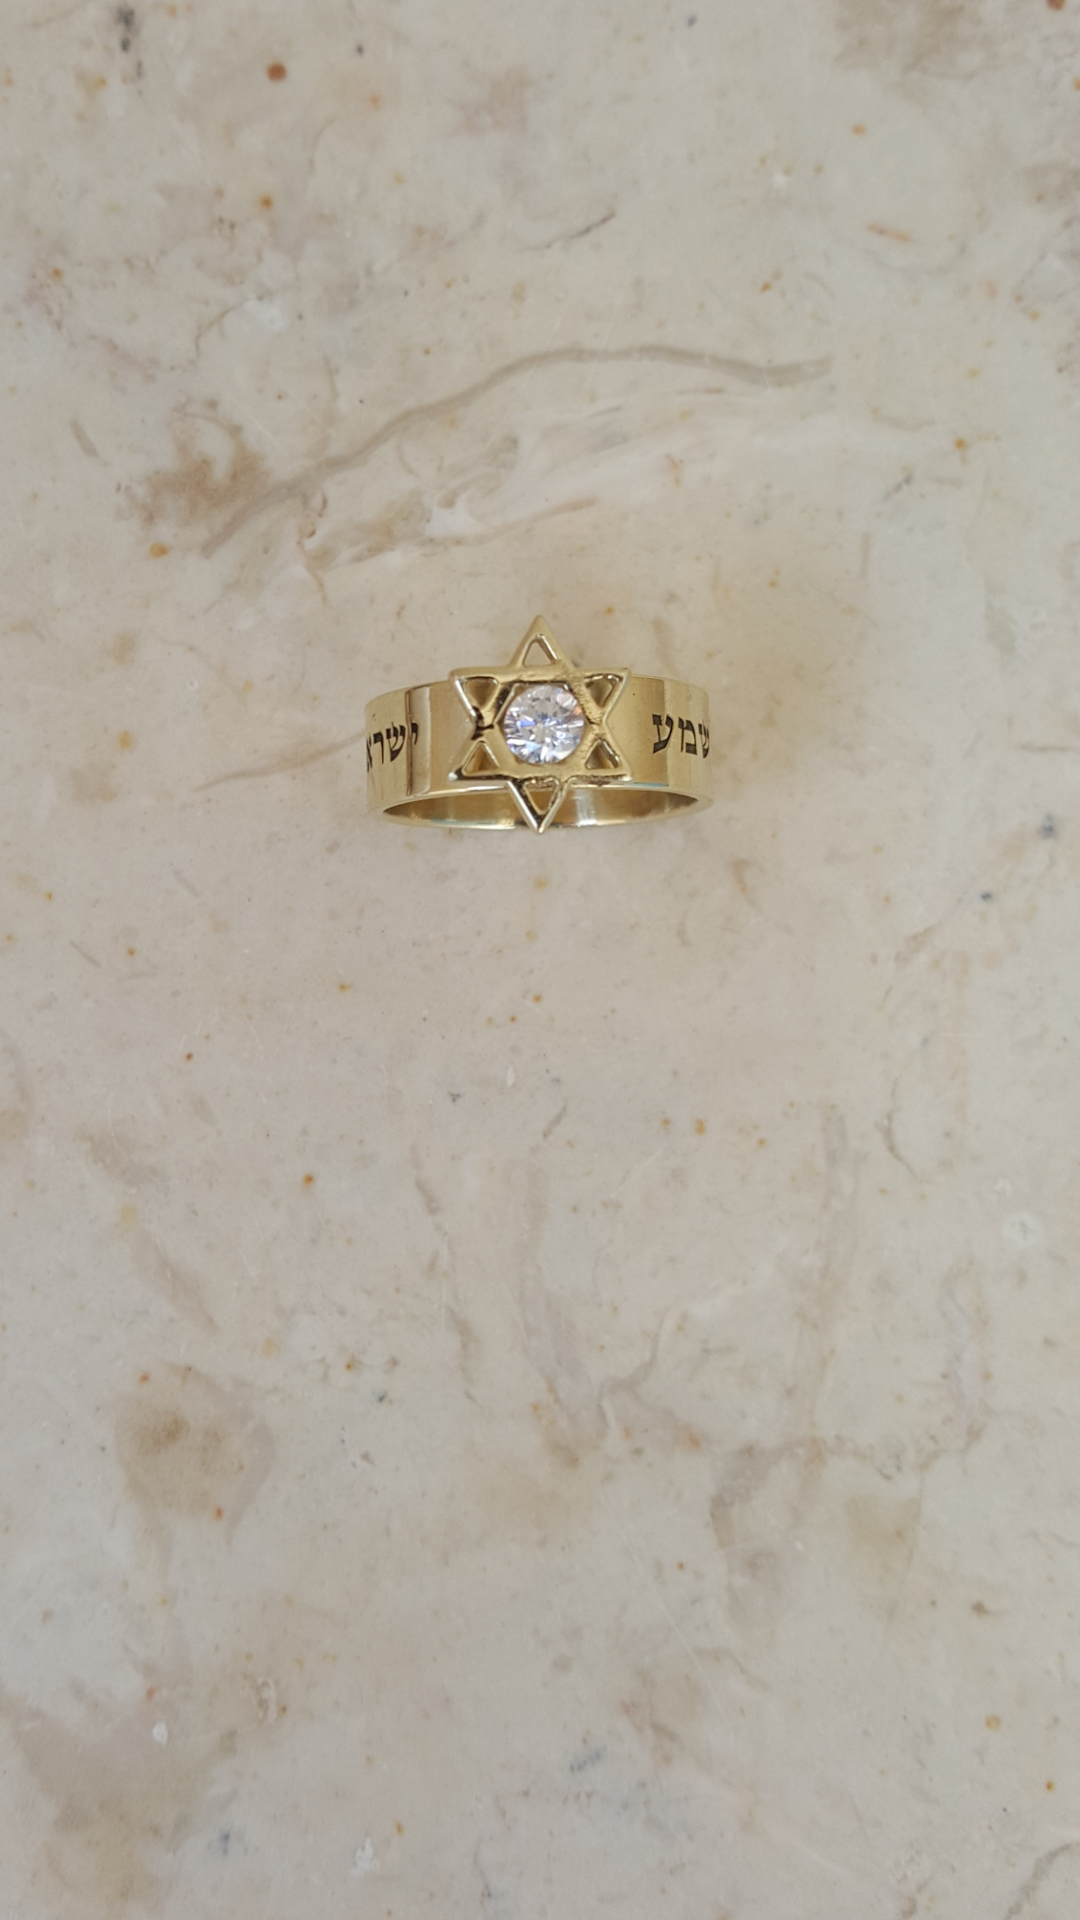 Hebrew Spinner Ring Gold & Silver Spinning Ring I Am My - Etsy | Spinner  rings gold, Rings for men, Jewish wedding rings